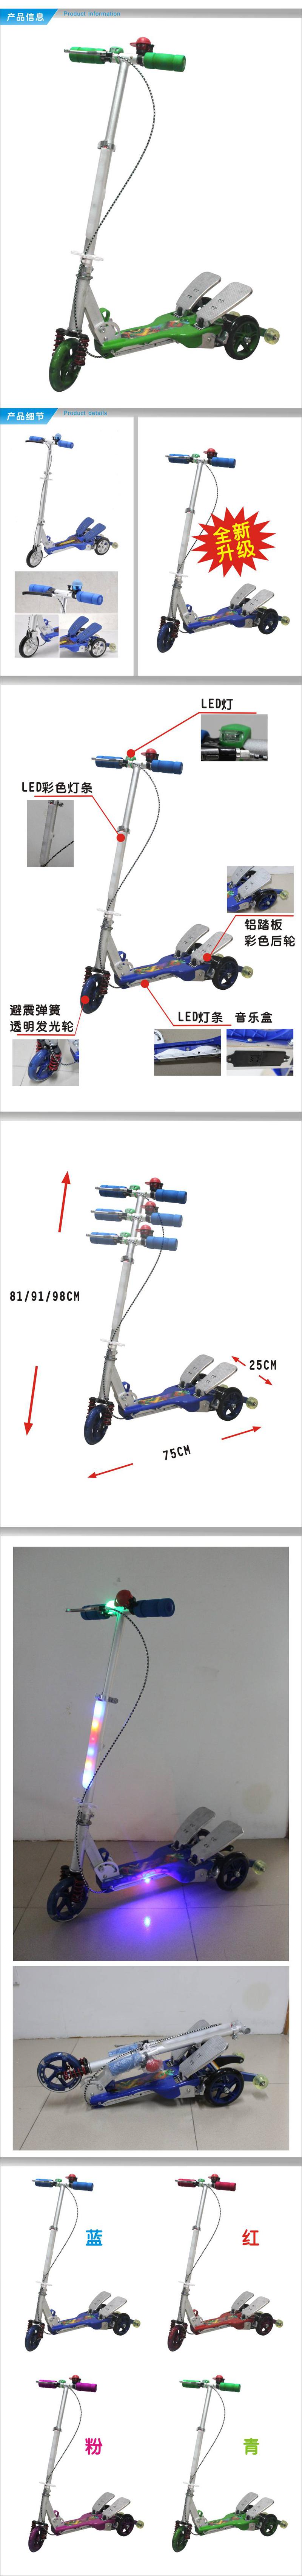 VOTRE新款儿童健步滑板车铝金属材质/儿童玩具/健身器材 BT-1018D青